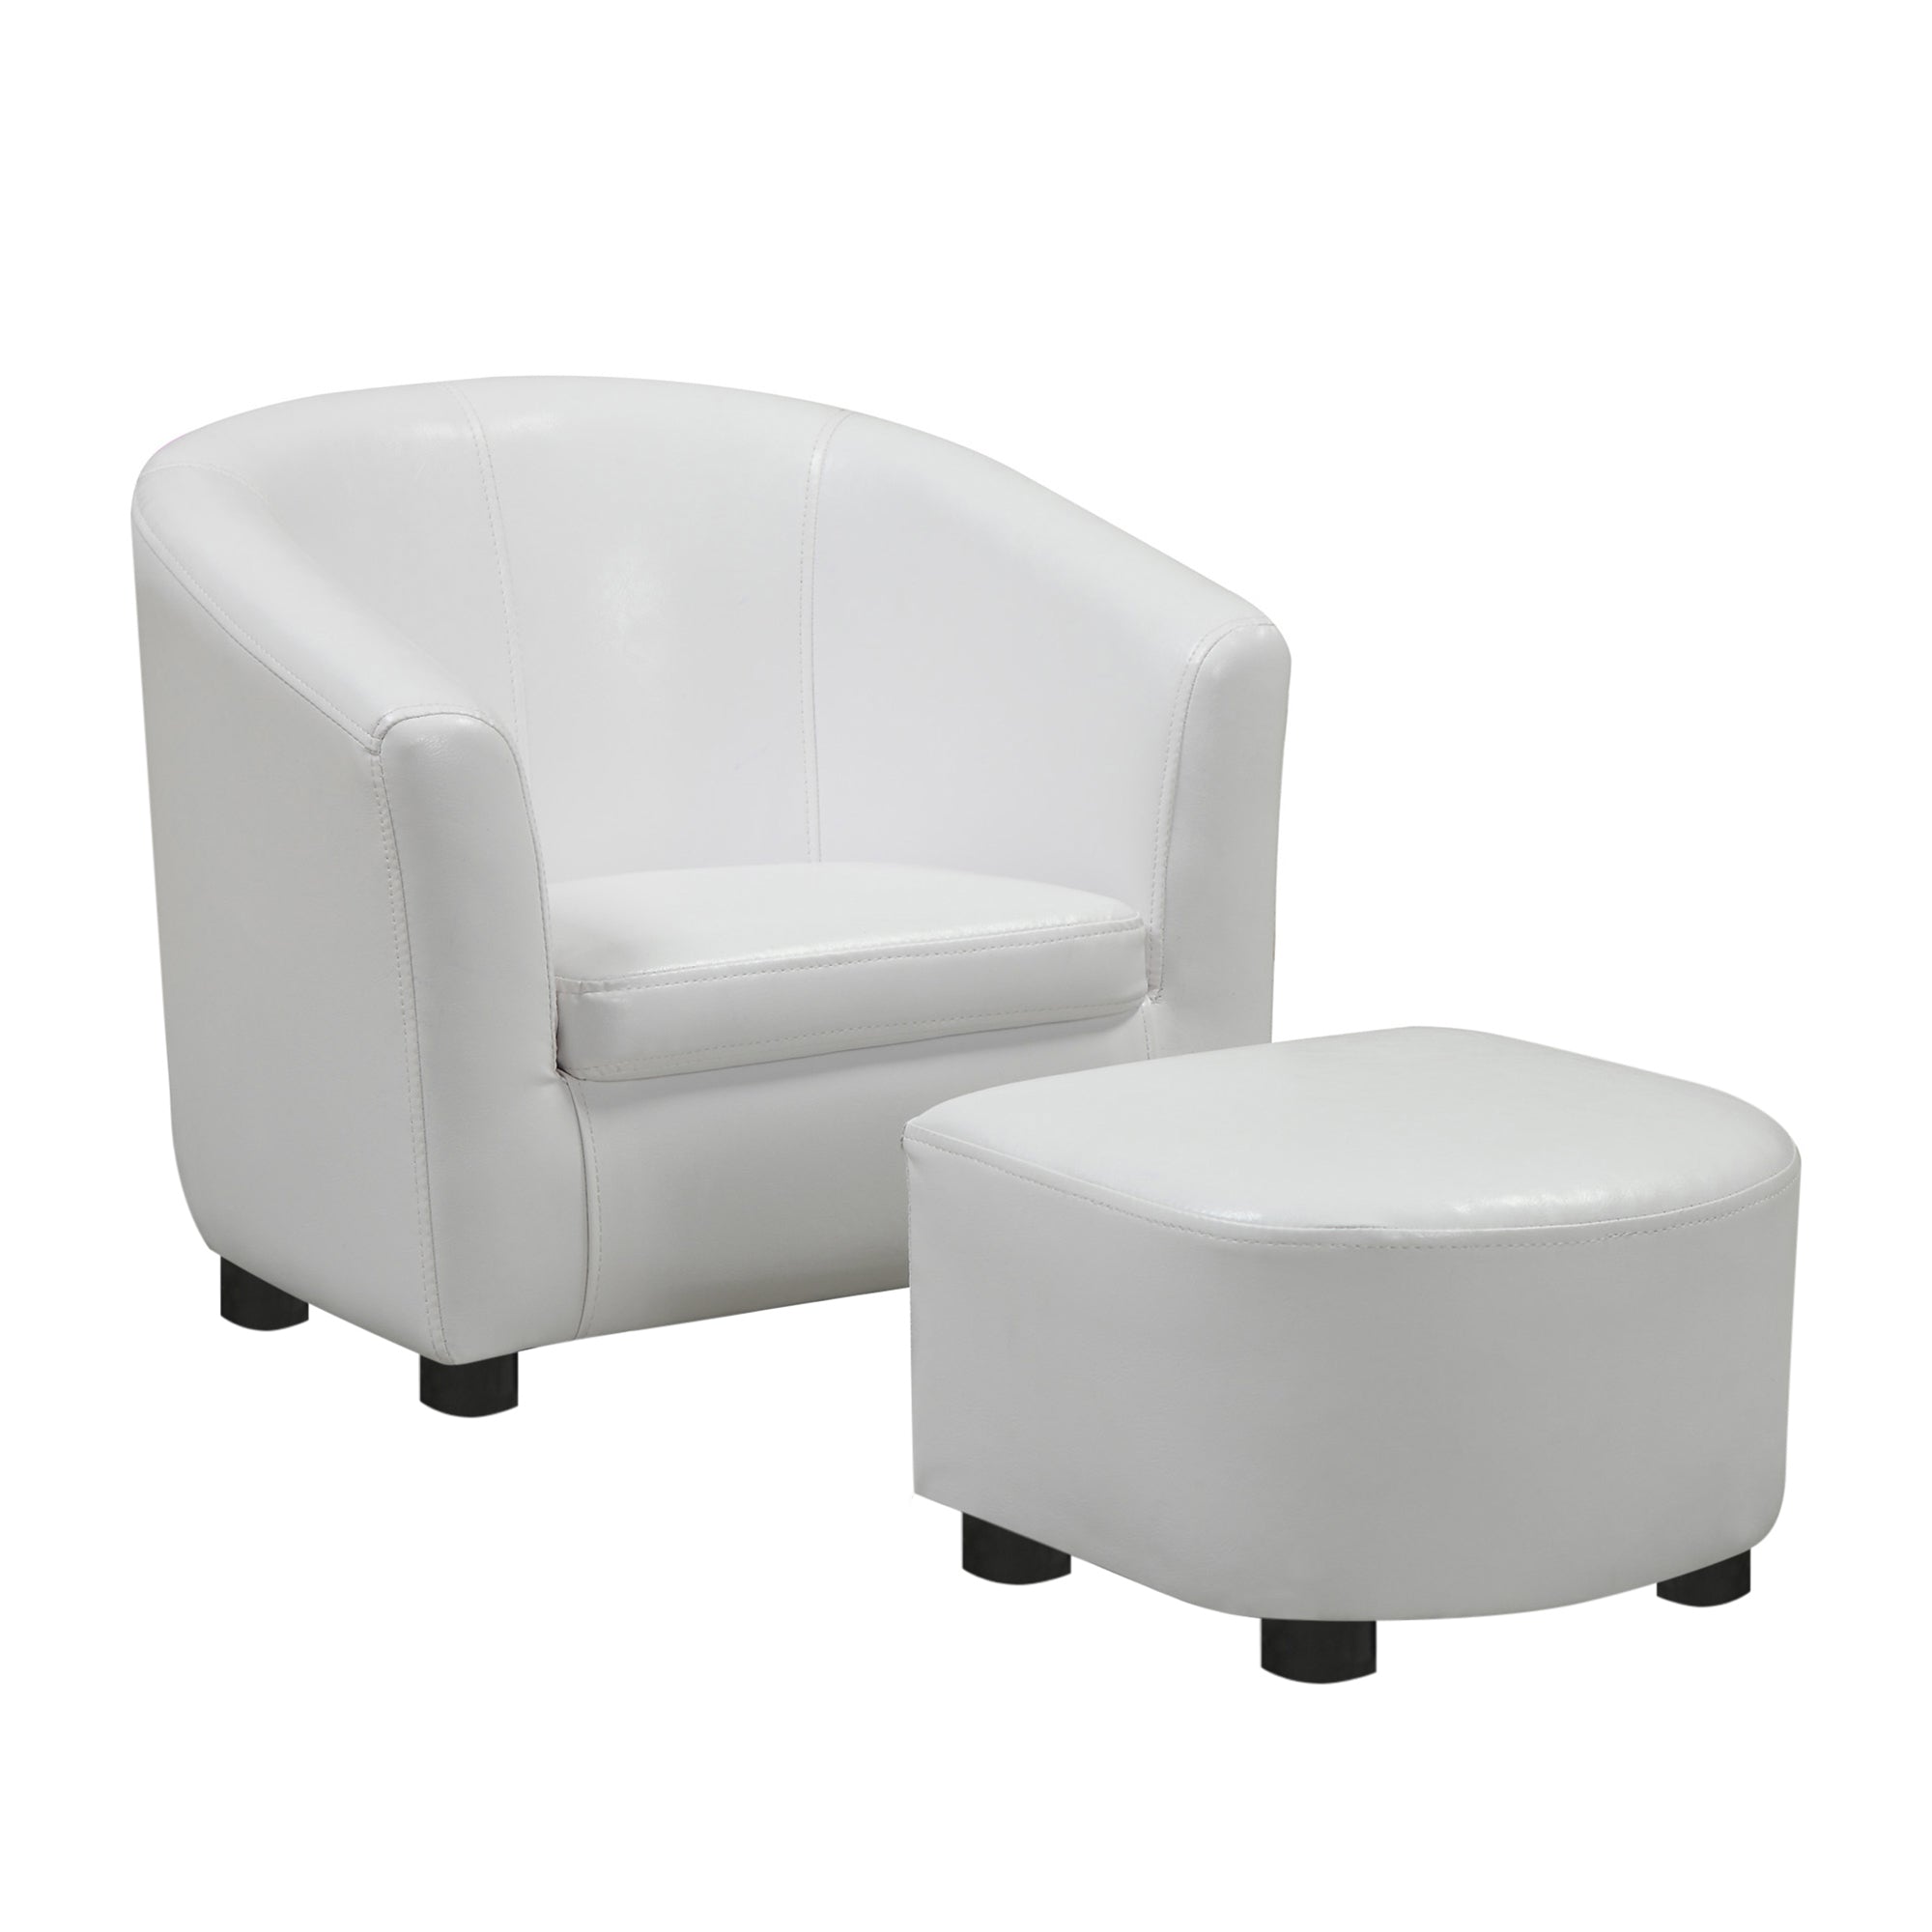 Juvenile Chair - 2 Pcs Set / White Leather-Look Fabric